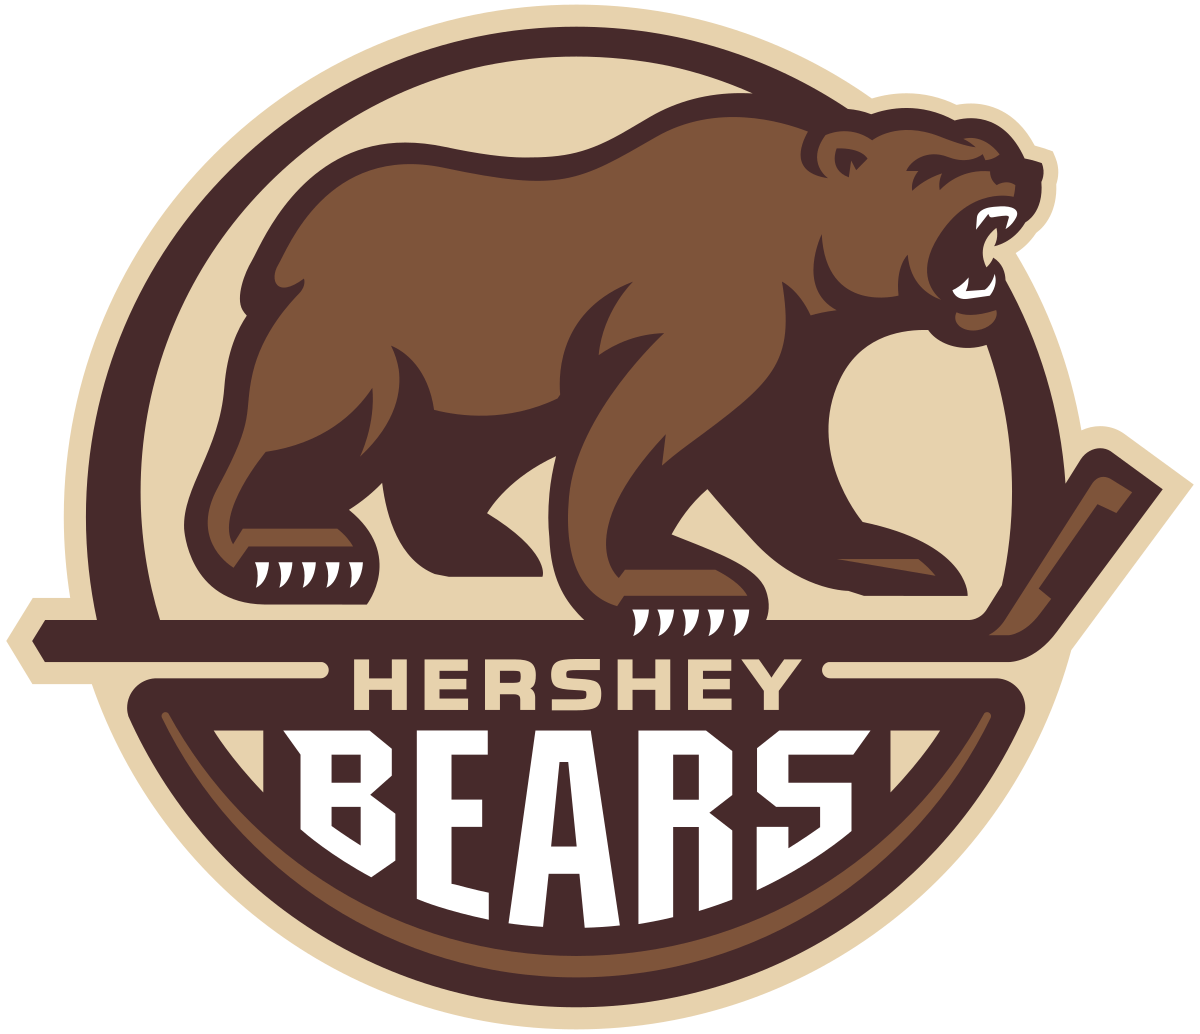 Black and White Bears Logo - Hershey Bears